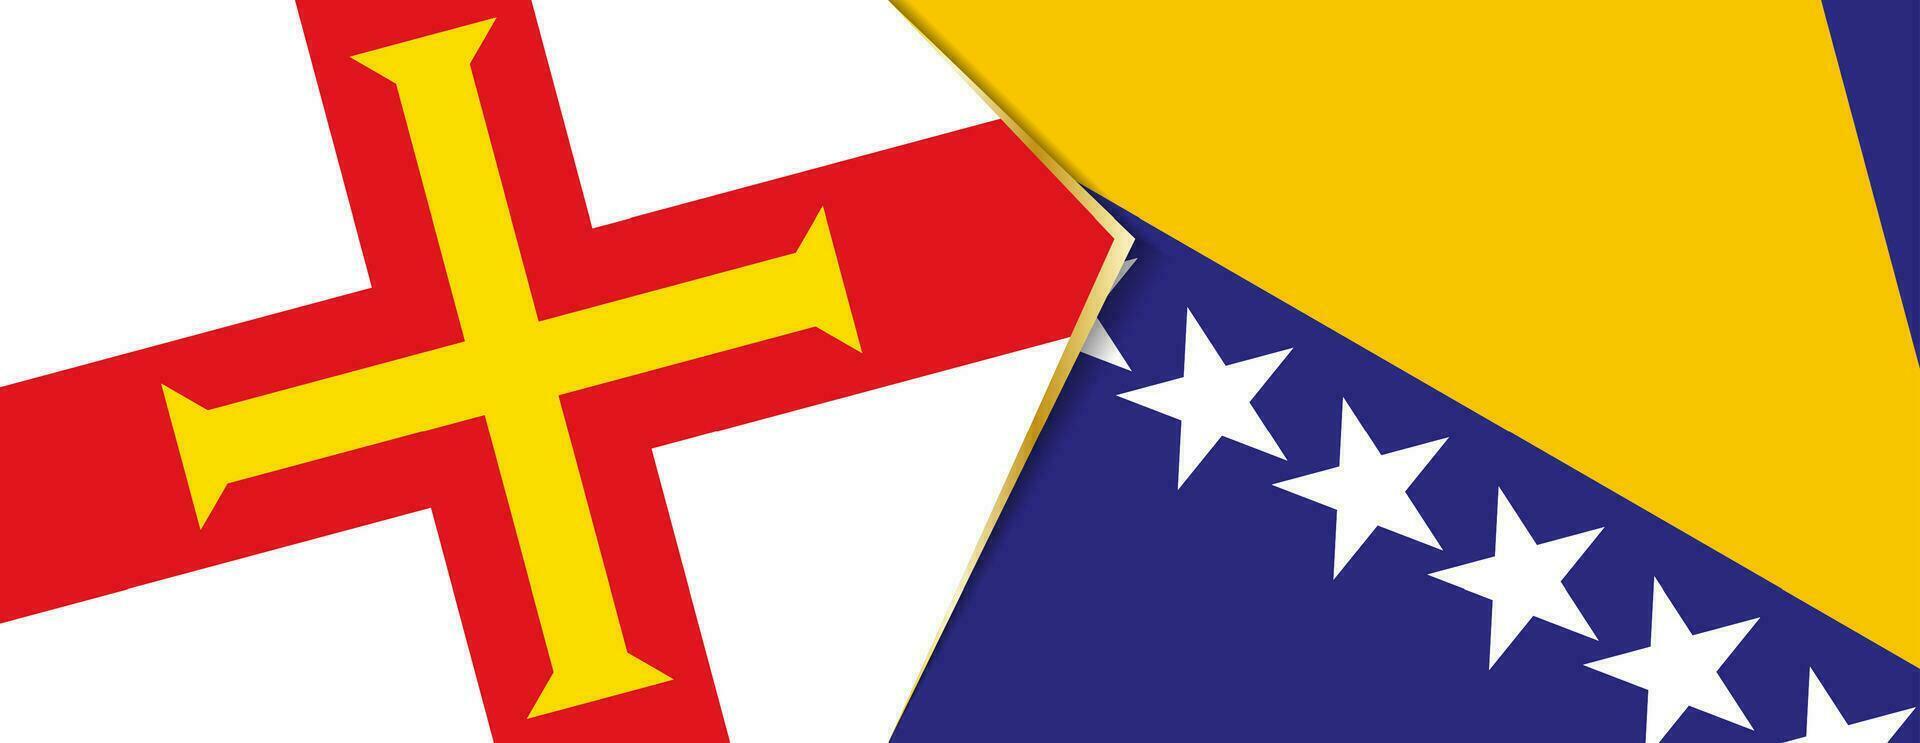 Guernsey en Bosnië en herzegovina vlaggen, twee vector vlaggen.